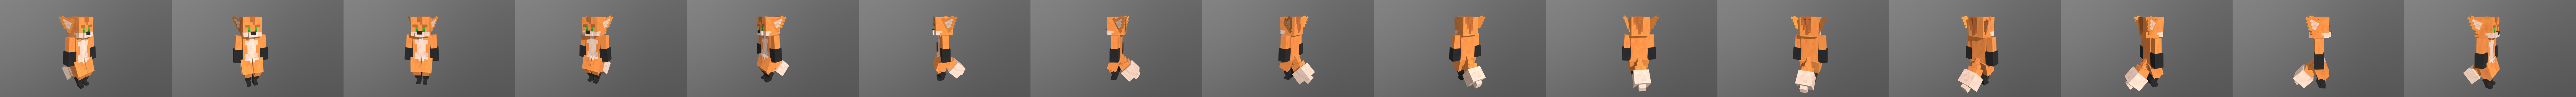 My Minecraft Bedrock Edition Skin I made. : r/furry